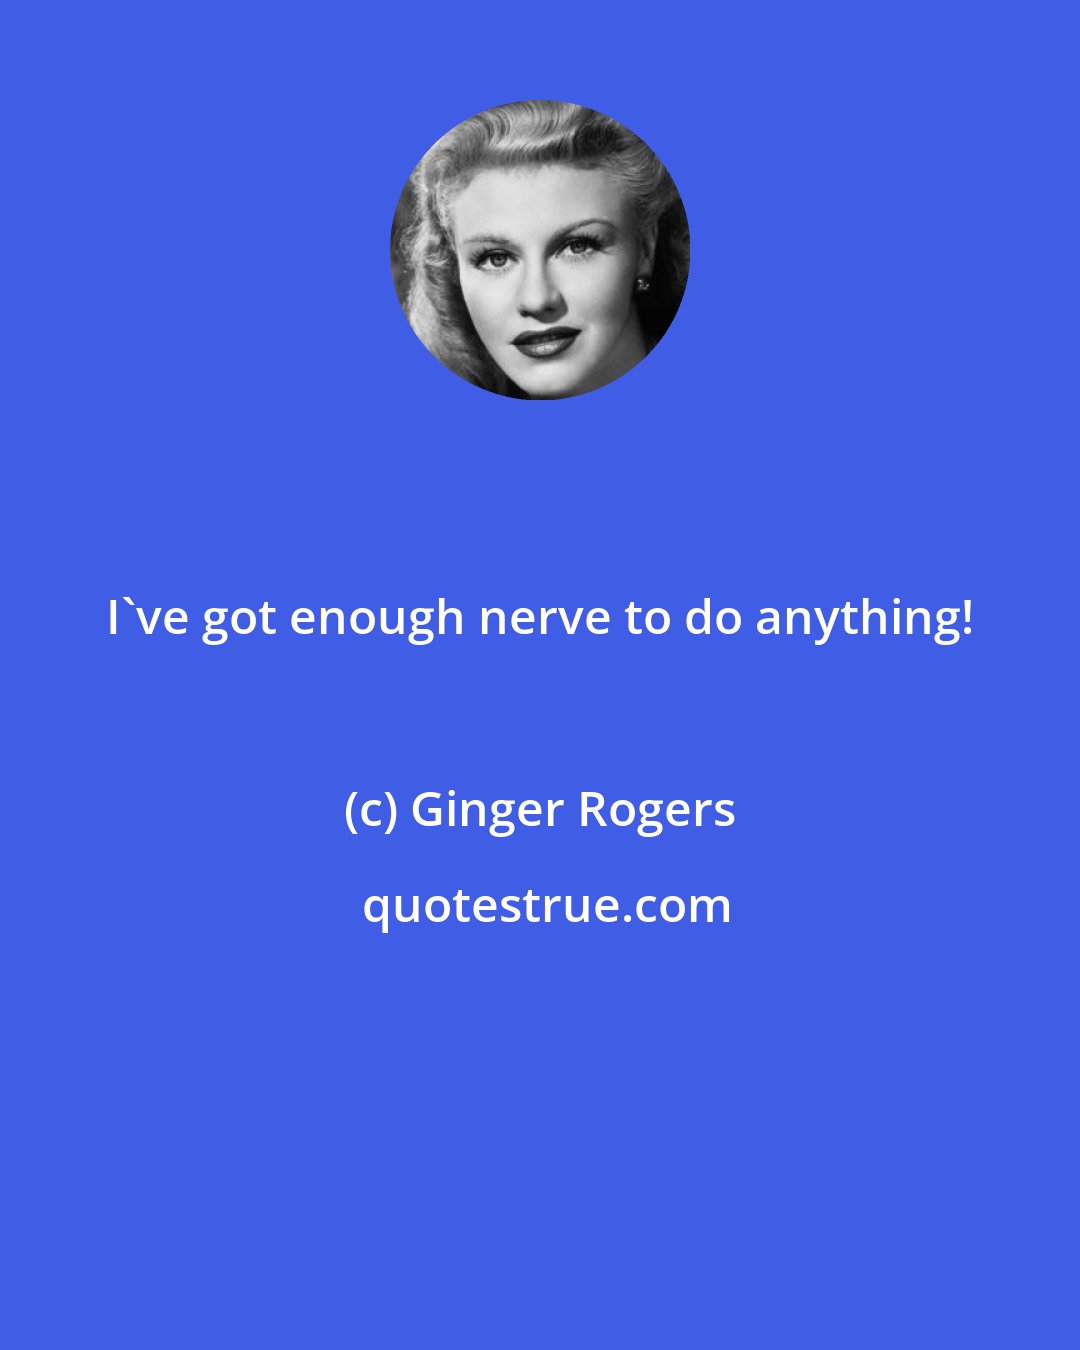 Ginger Rogers: I've got enough nerve to do anything!